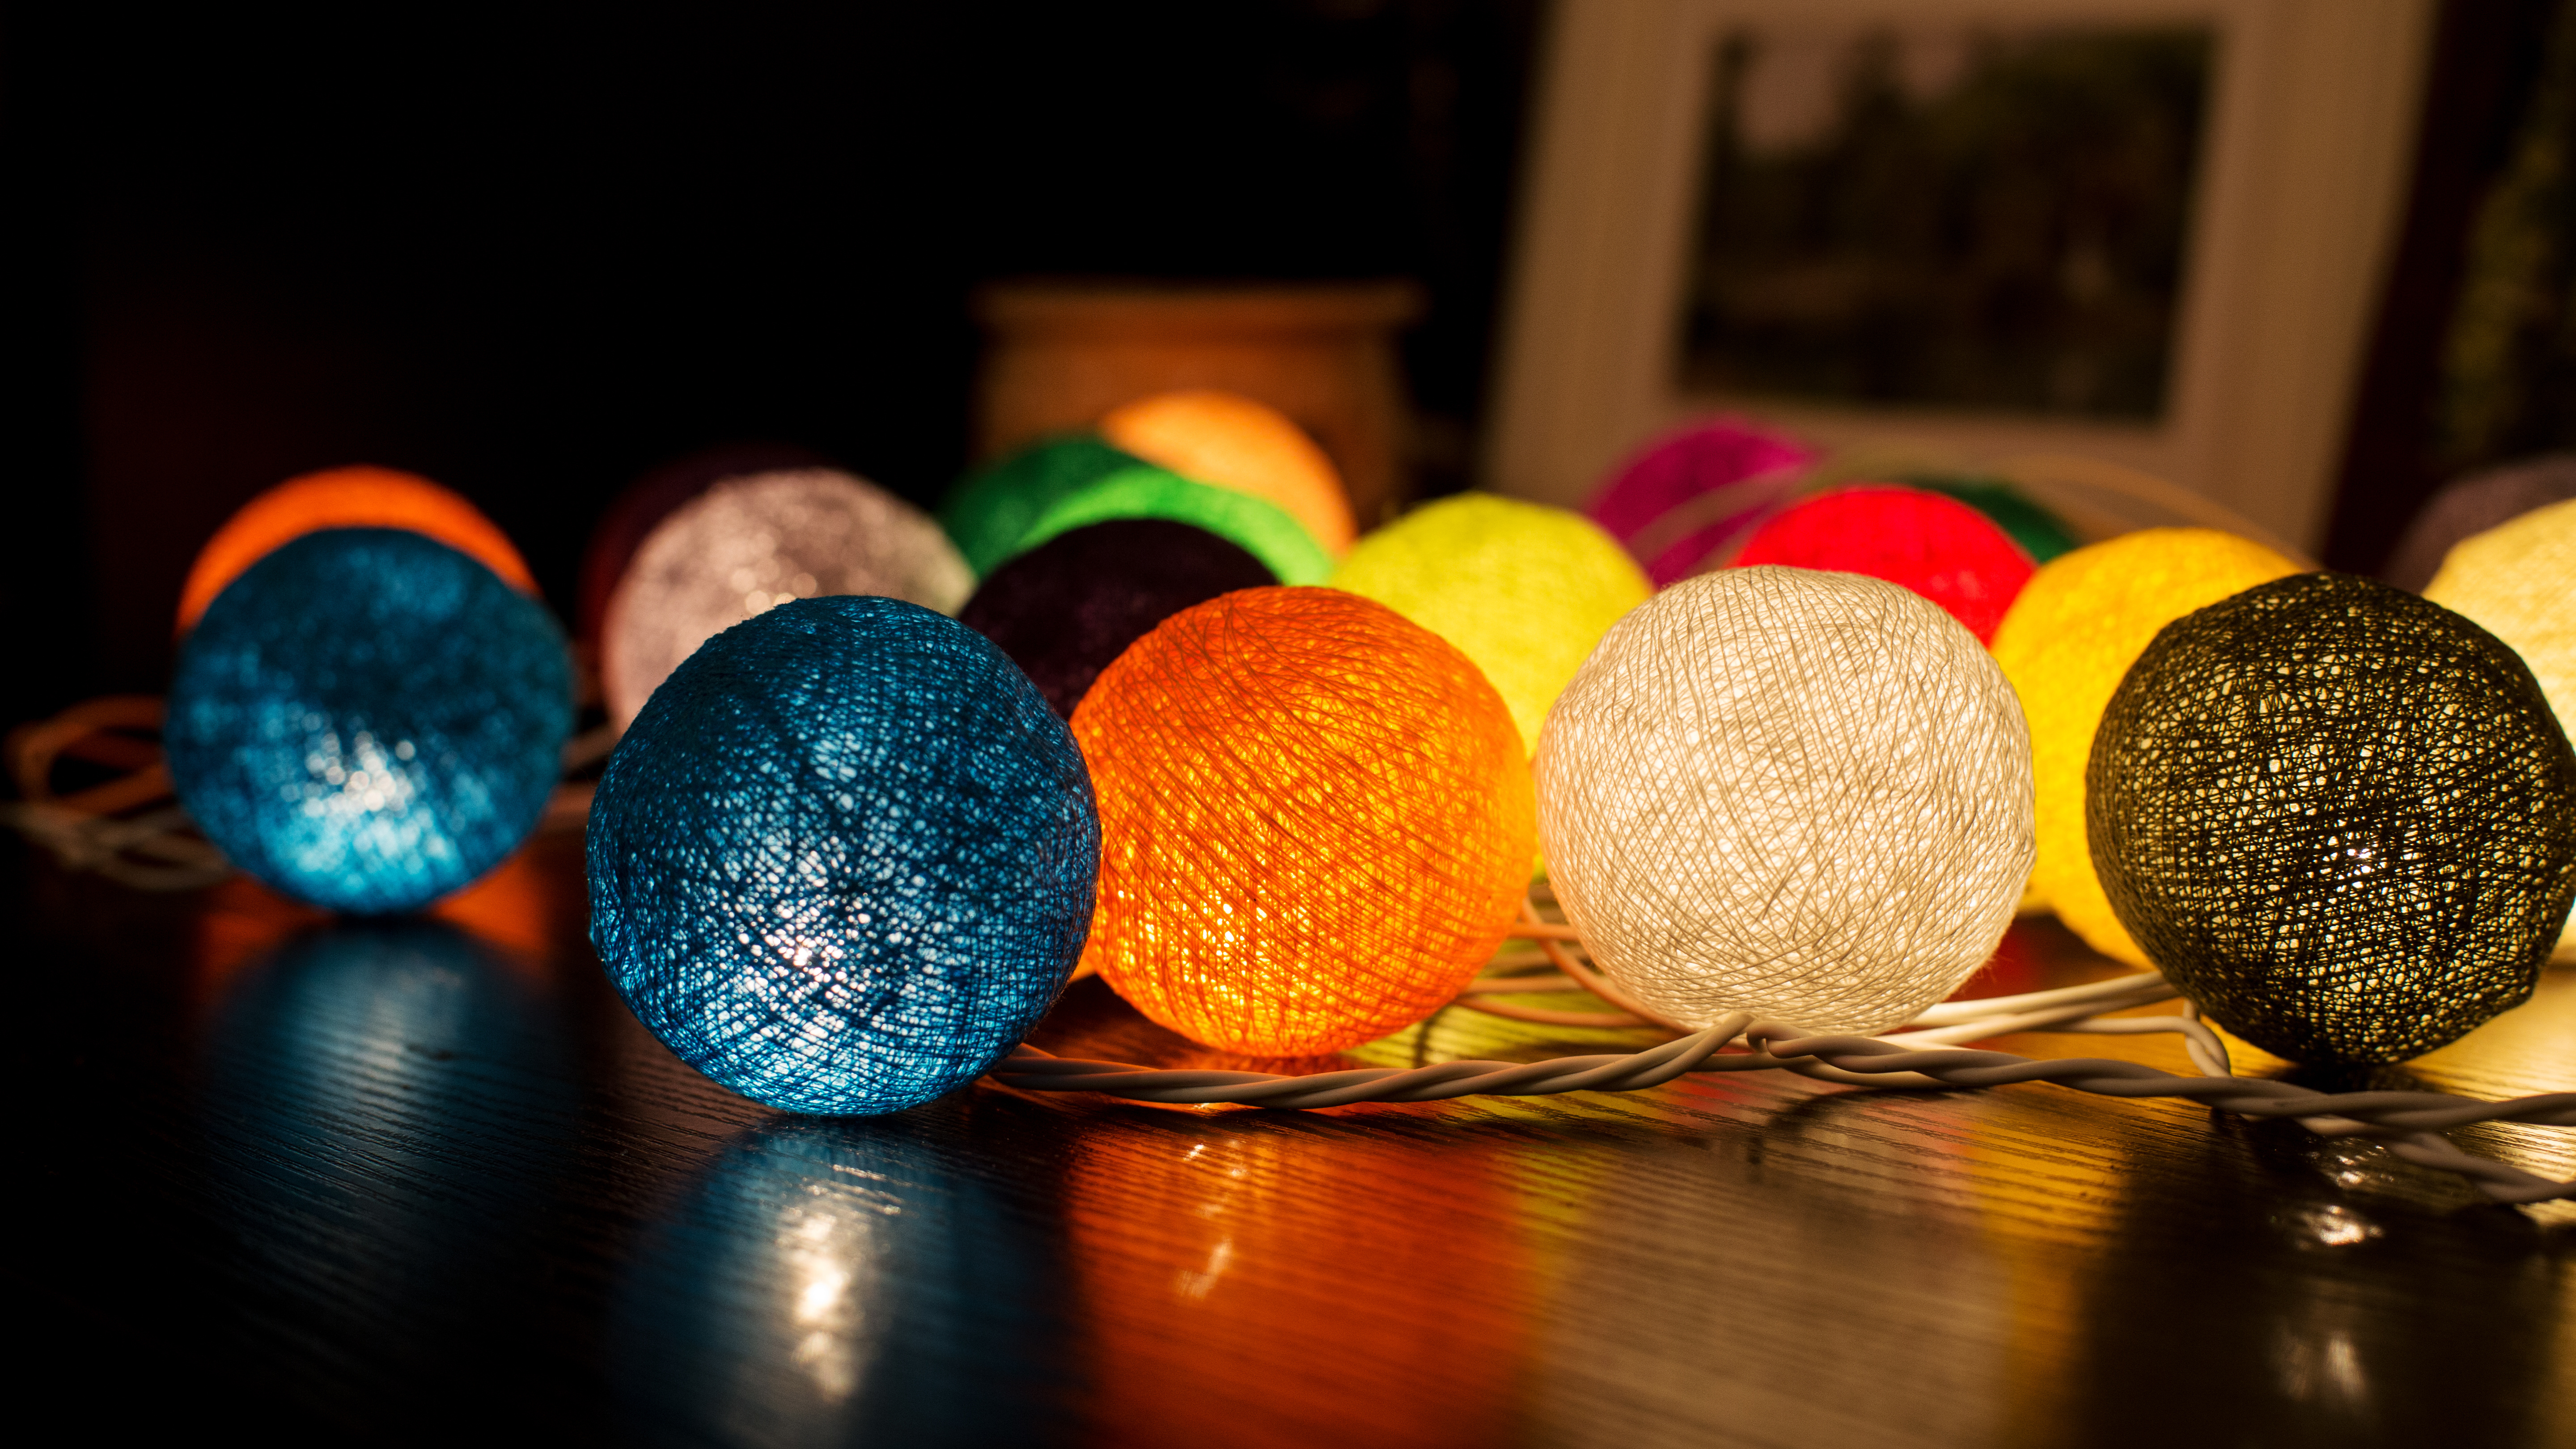 Cotton Ball Lights – lampki, które budują nastrój w domu!